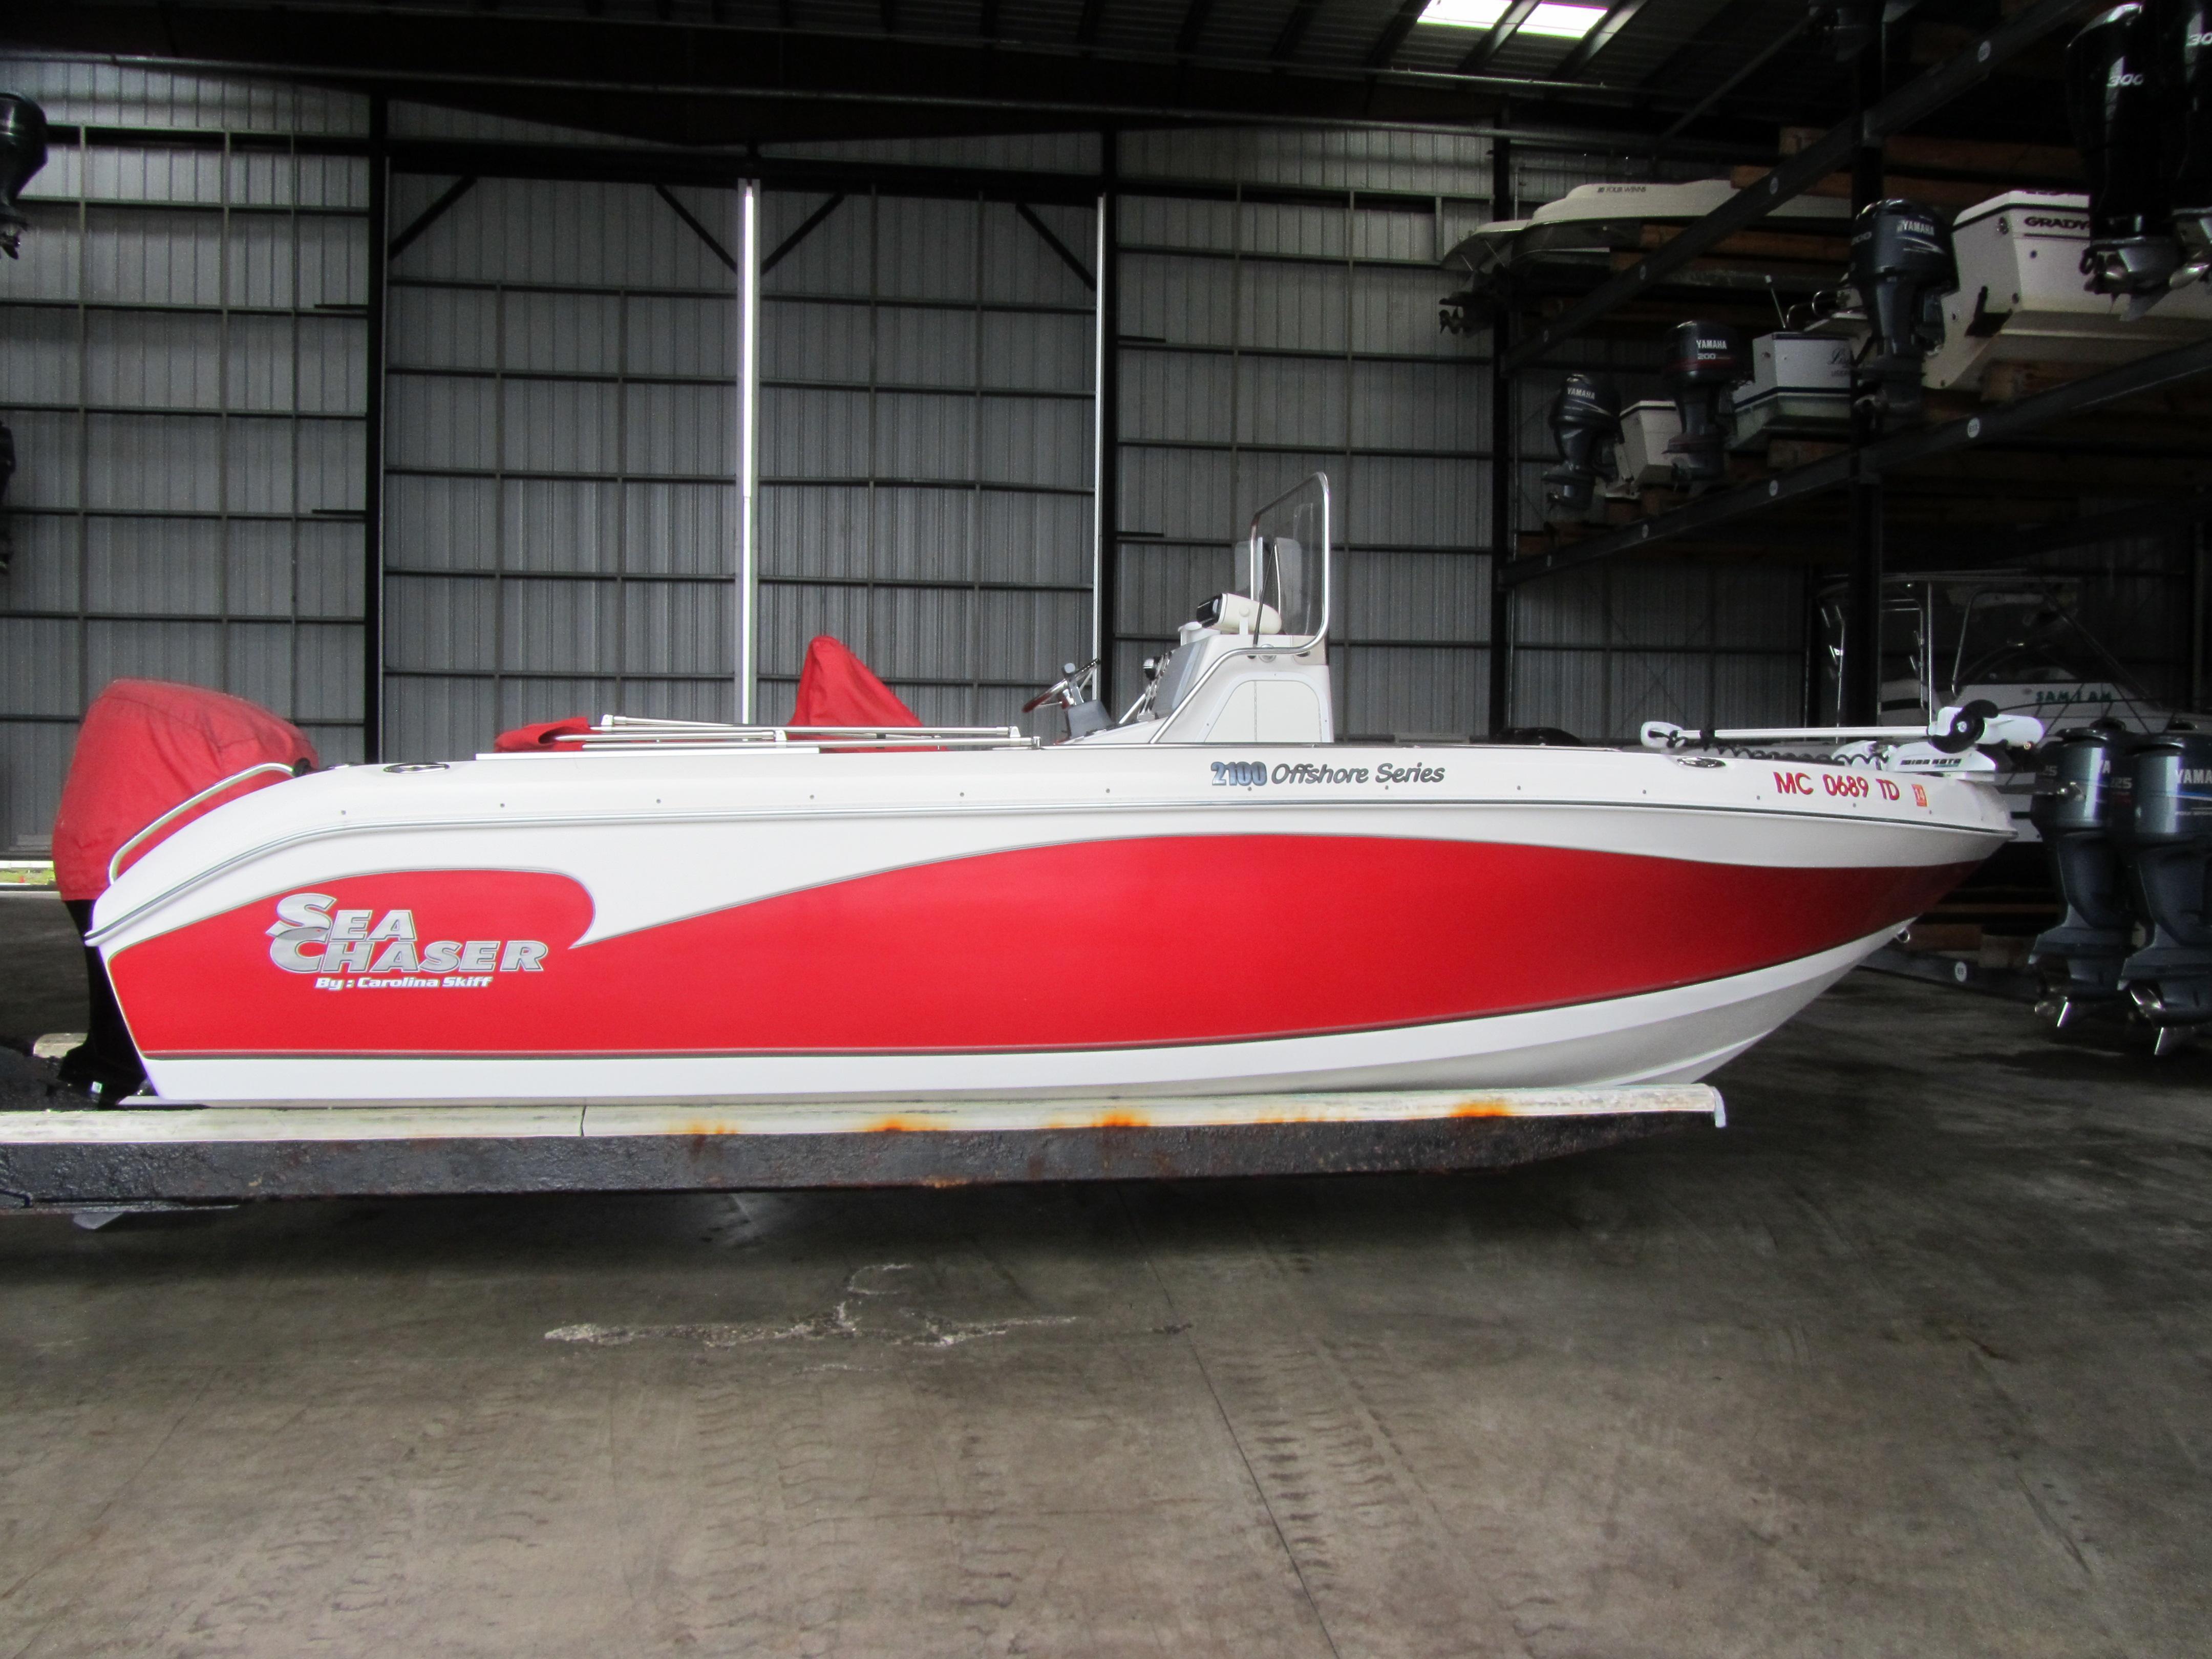 Sea Chaser 2100 CC, Bokelea